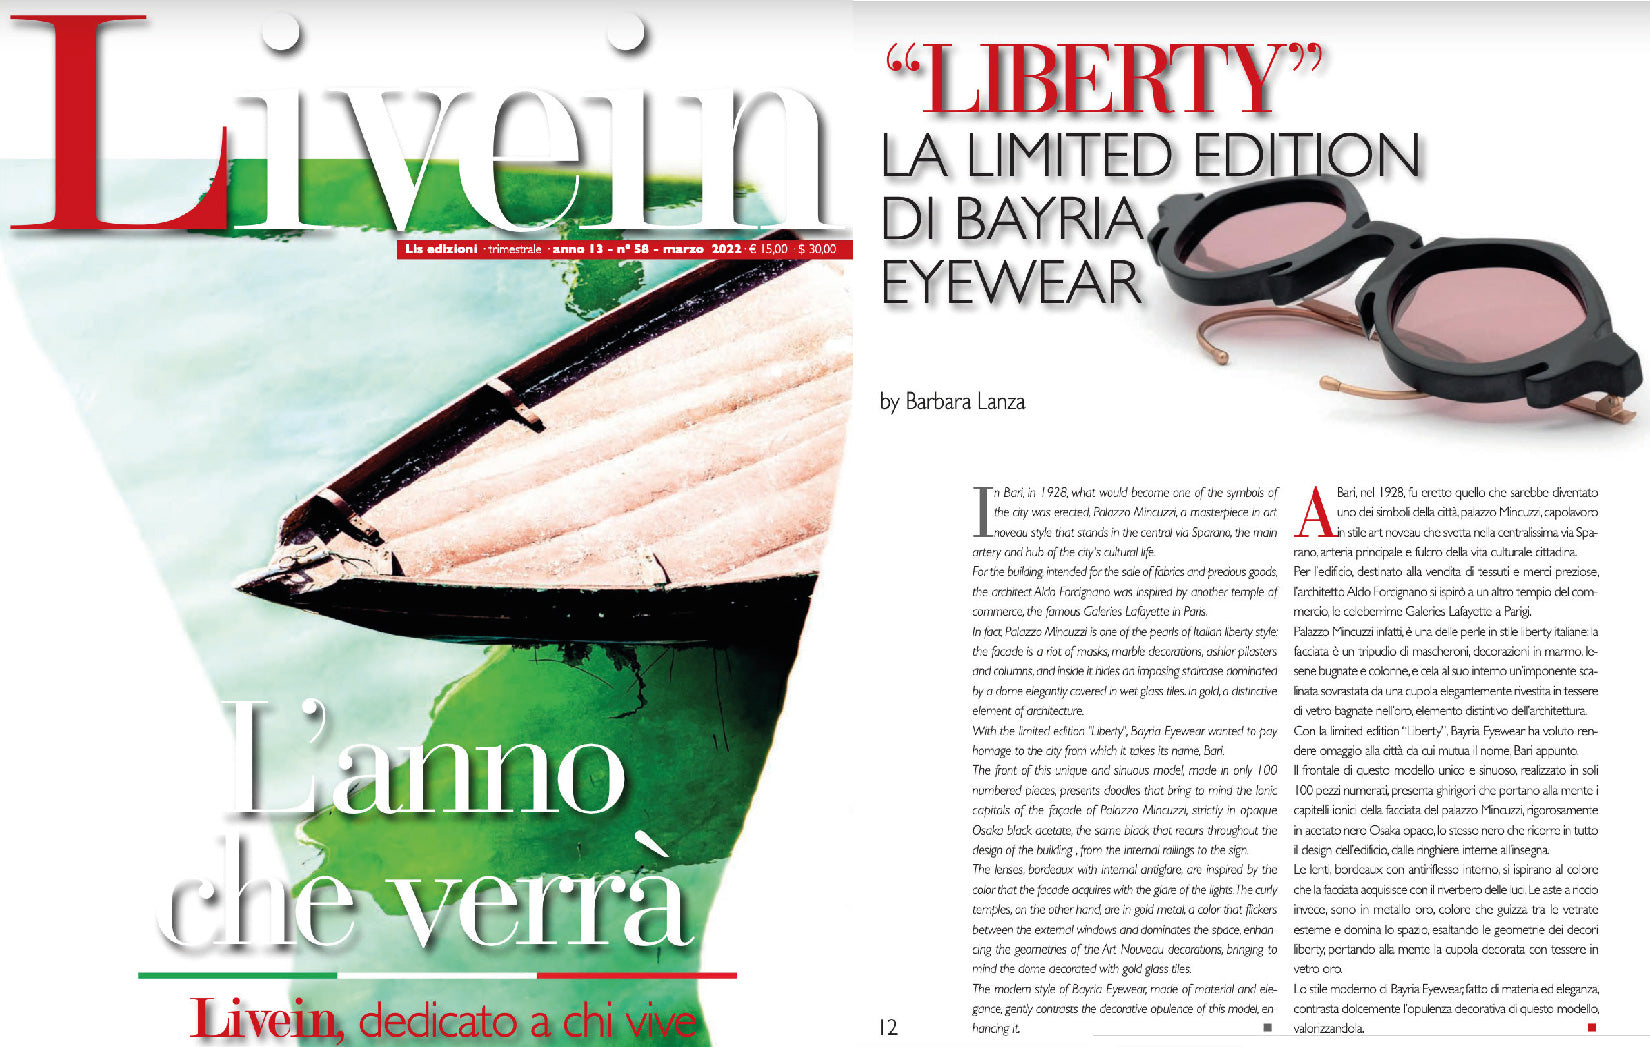 "Liberty" The limited edition of Bayria Eyewear